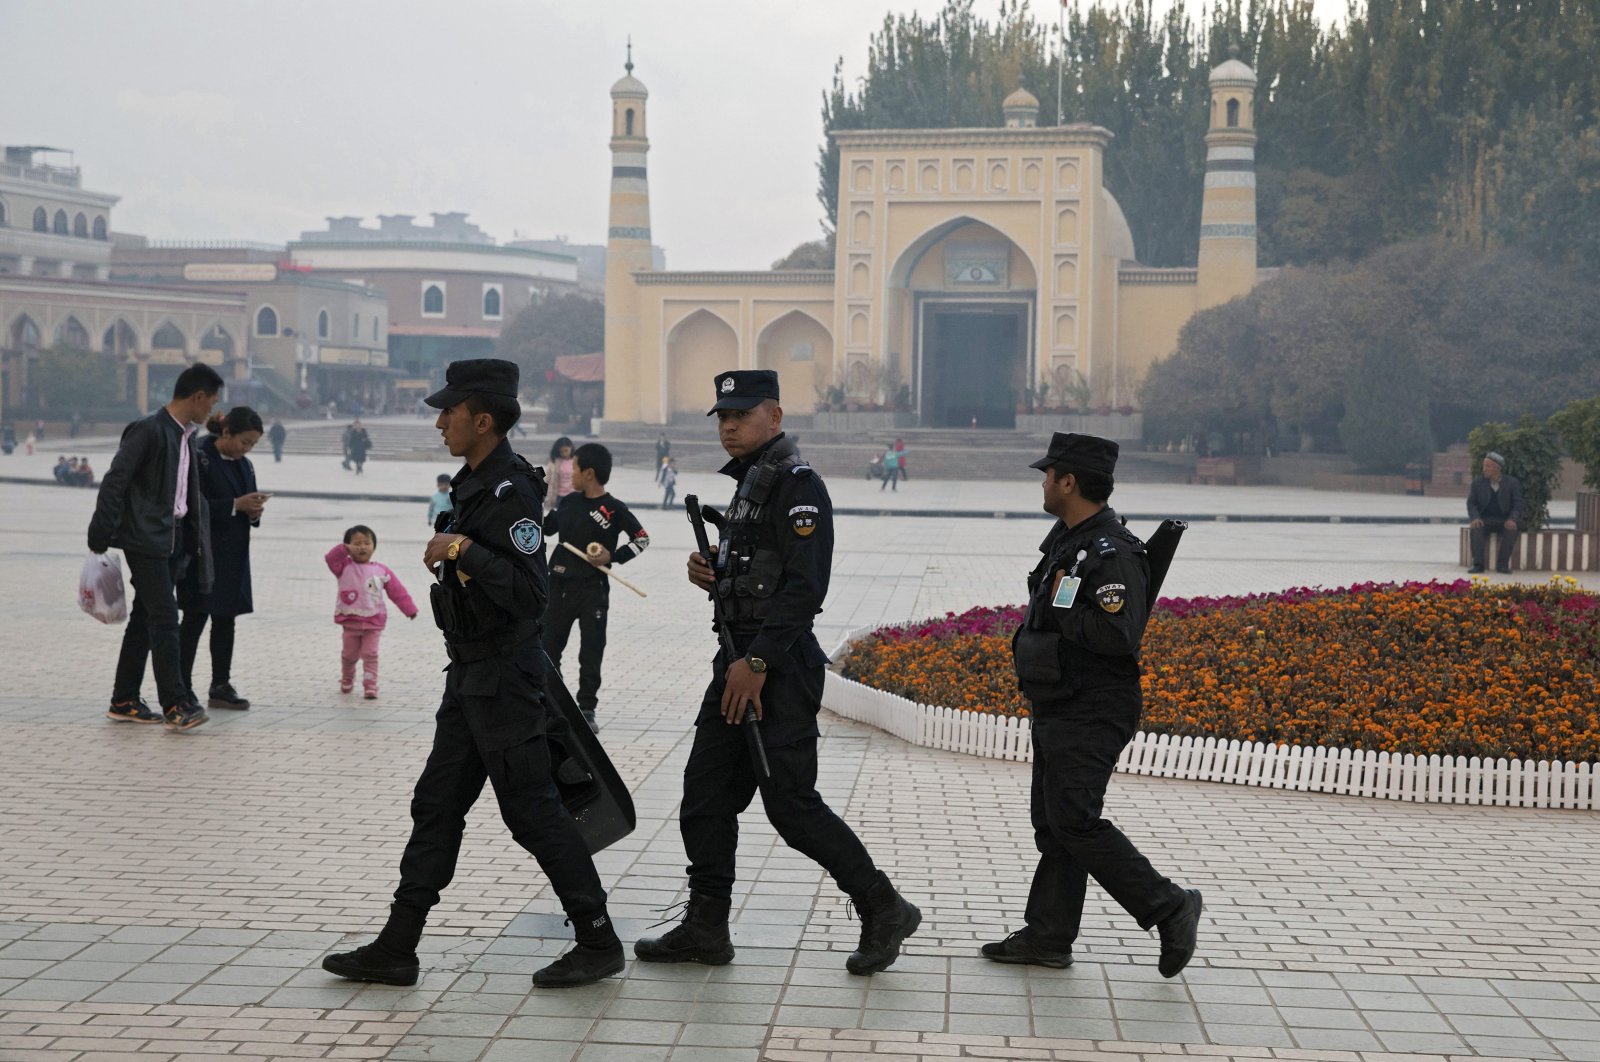 Uighur security personnel patrol near the Id Kah Mosque in Kashgar in western China's Xinjiang region, Nov. 4, 2017 (AP Photo)